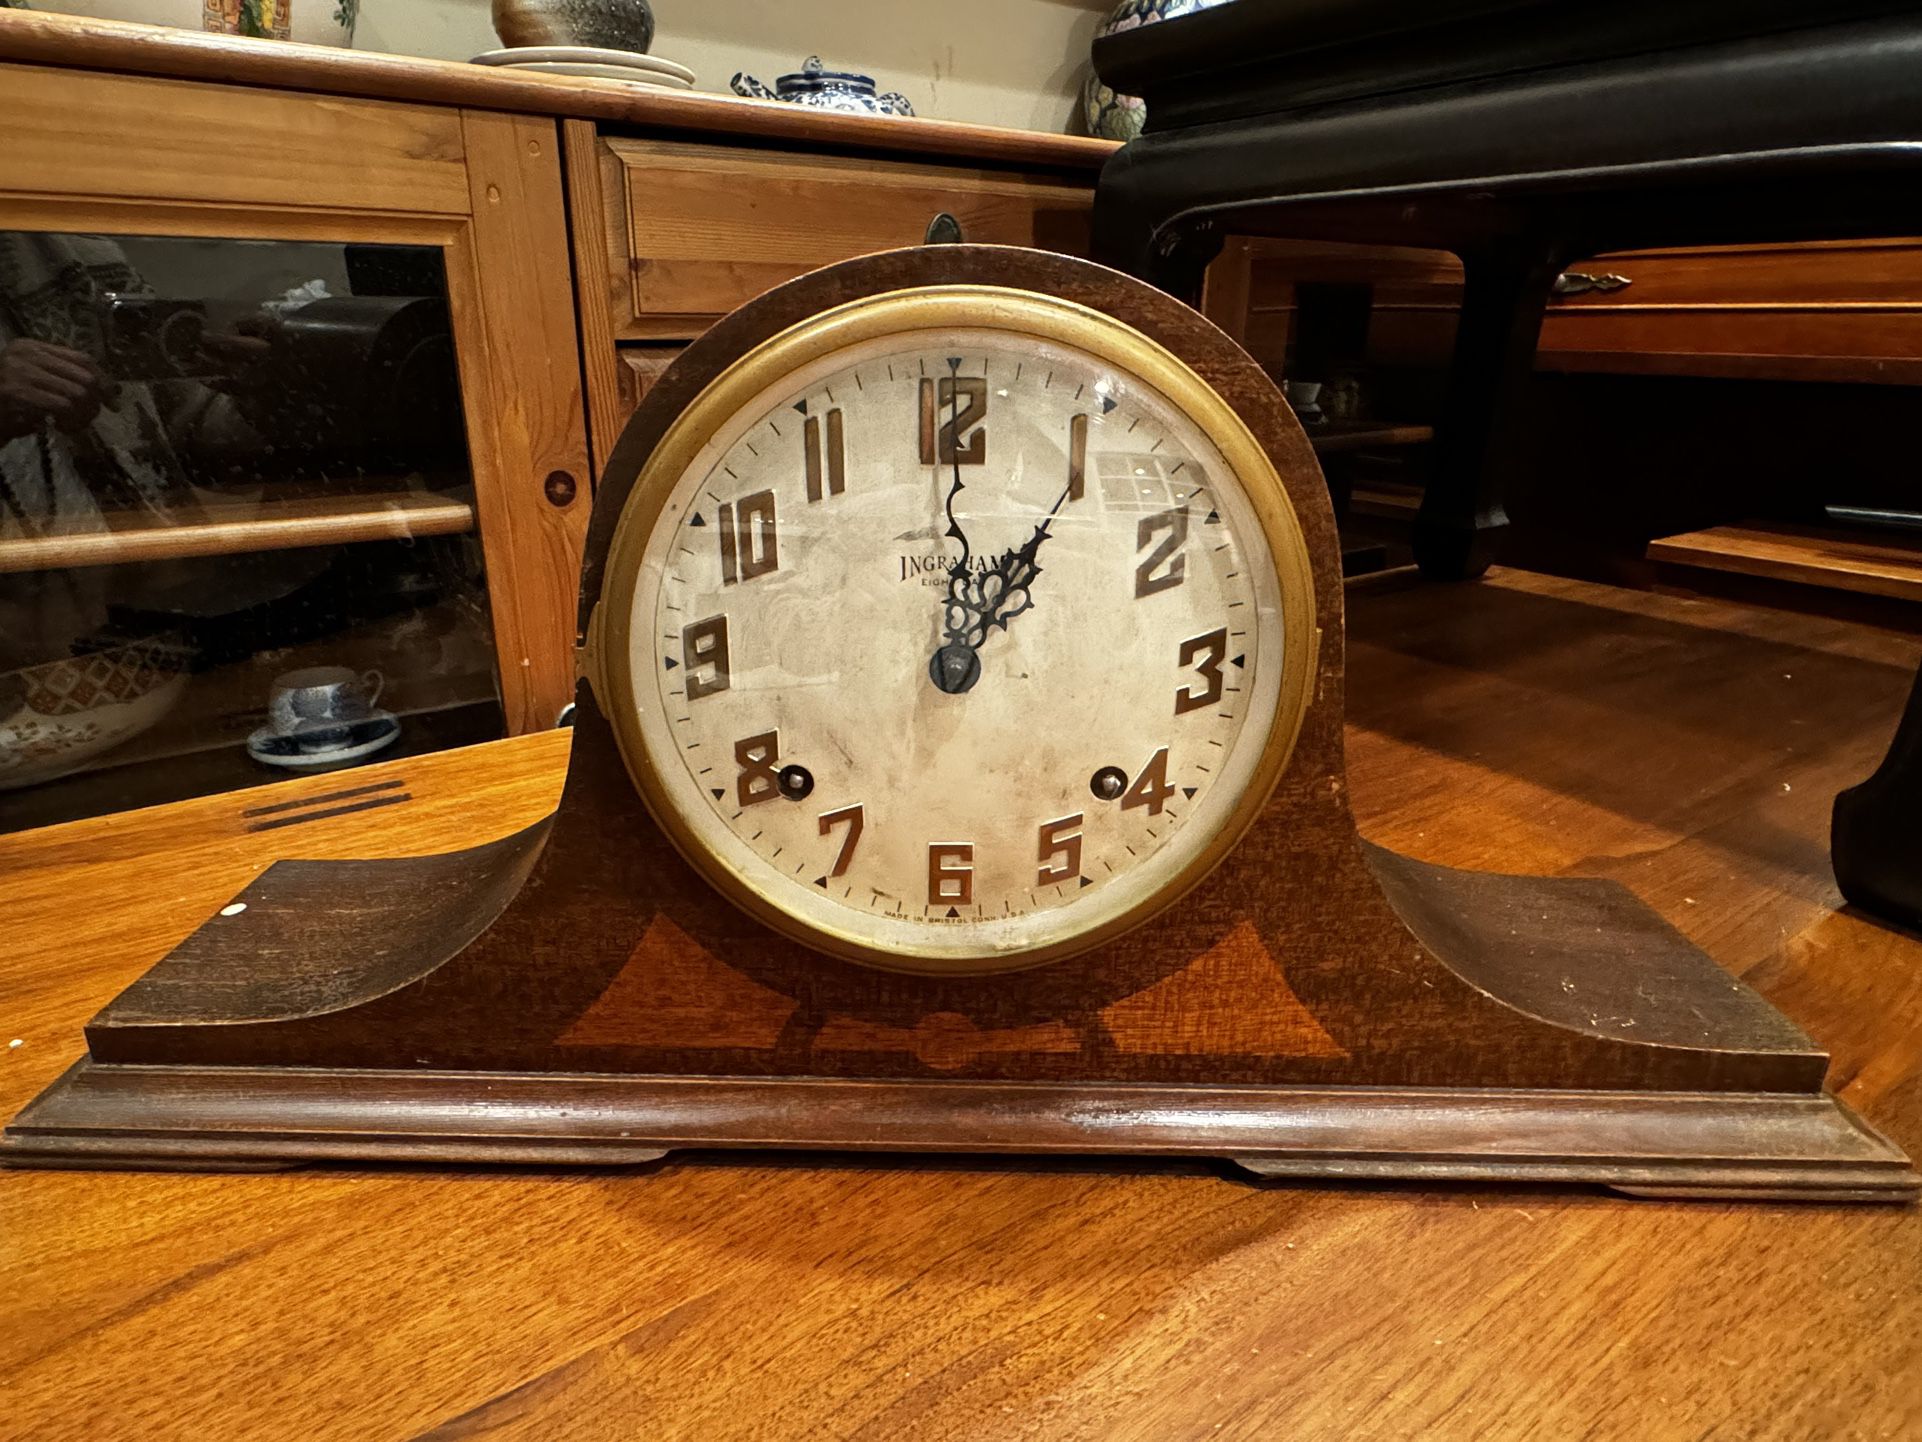 Mechanical antique clock